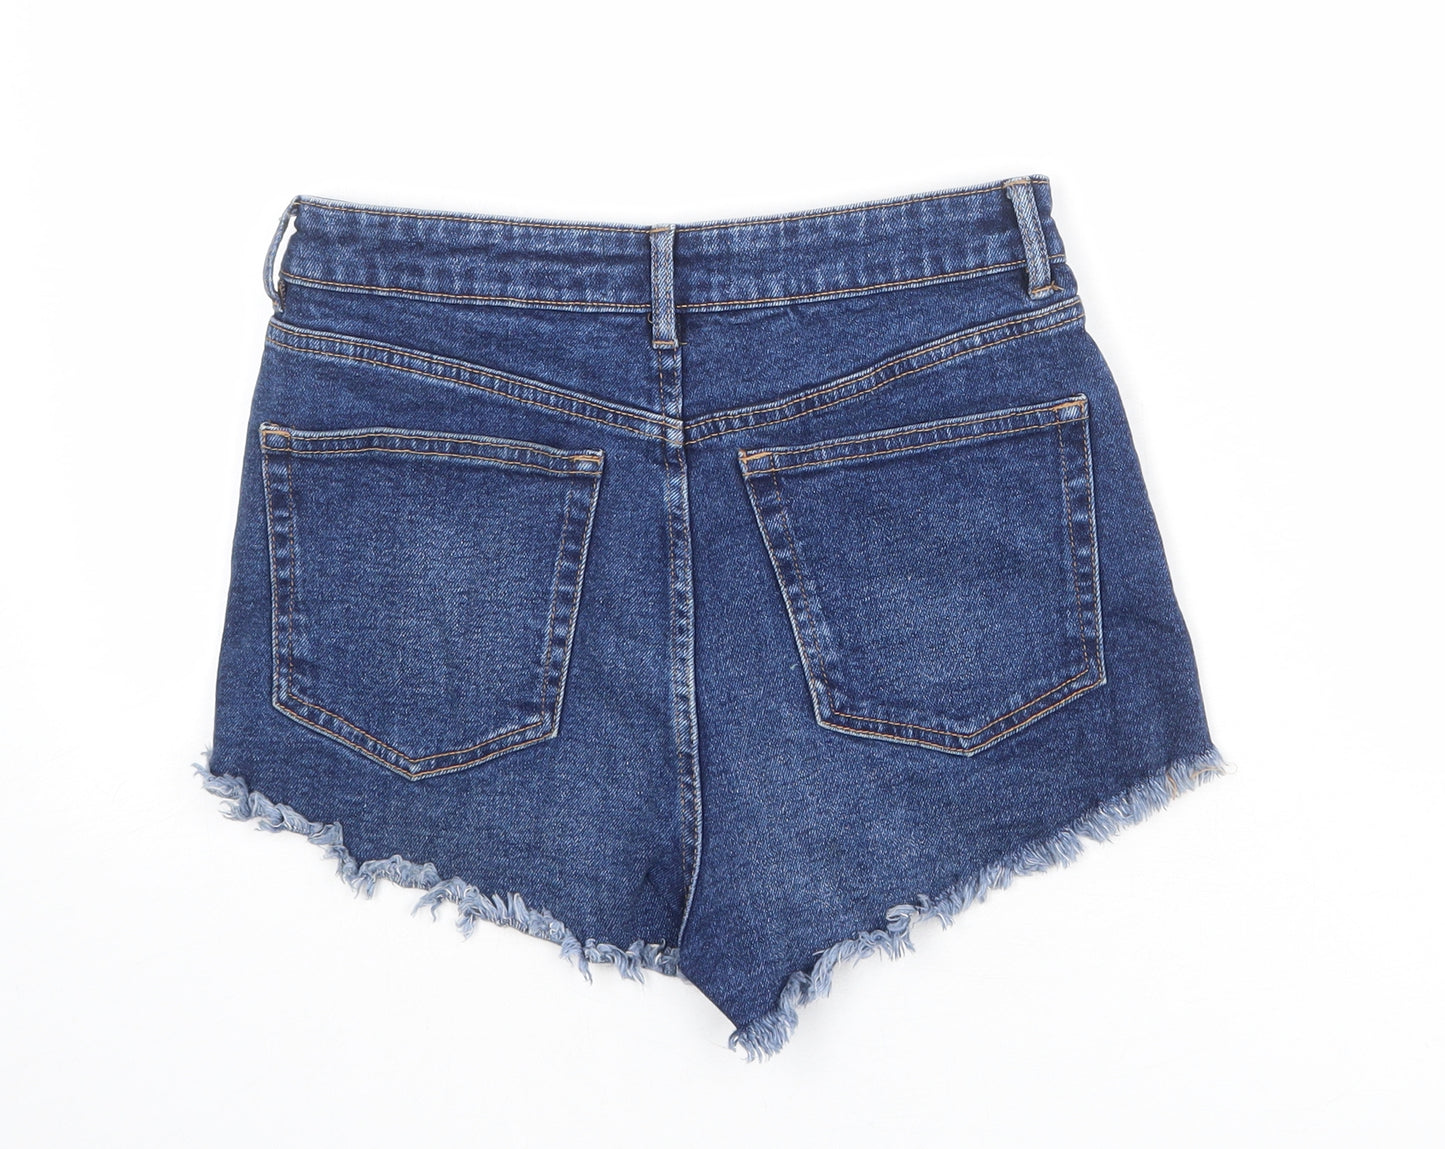 Zara Womens Blue Cotton Boyfriend Shorts Size 8 L3 in Regular Zip - Raw Hems